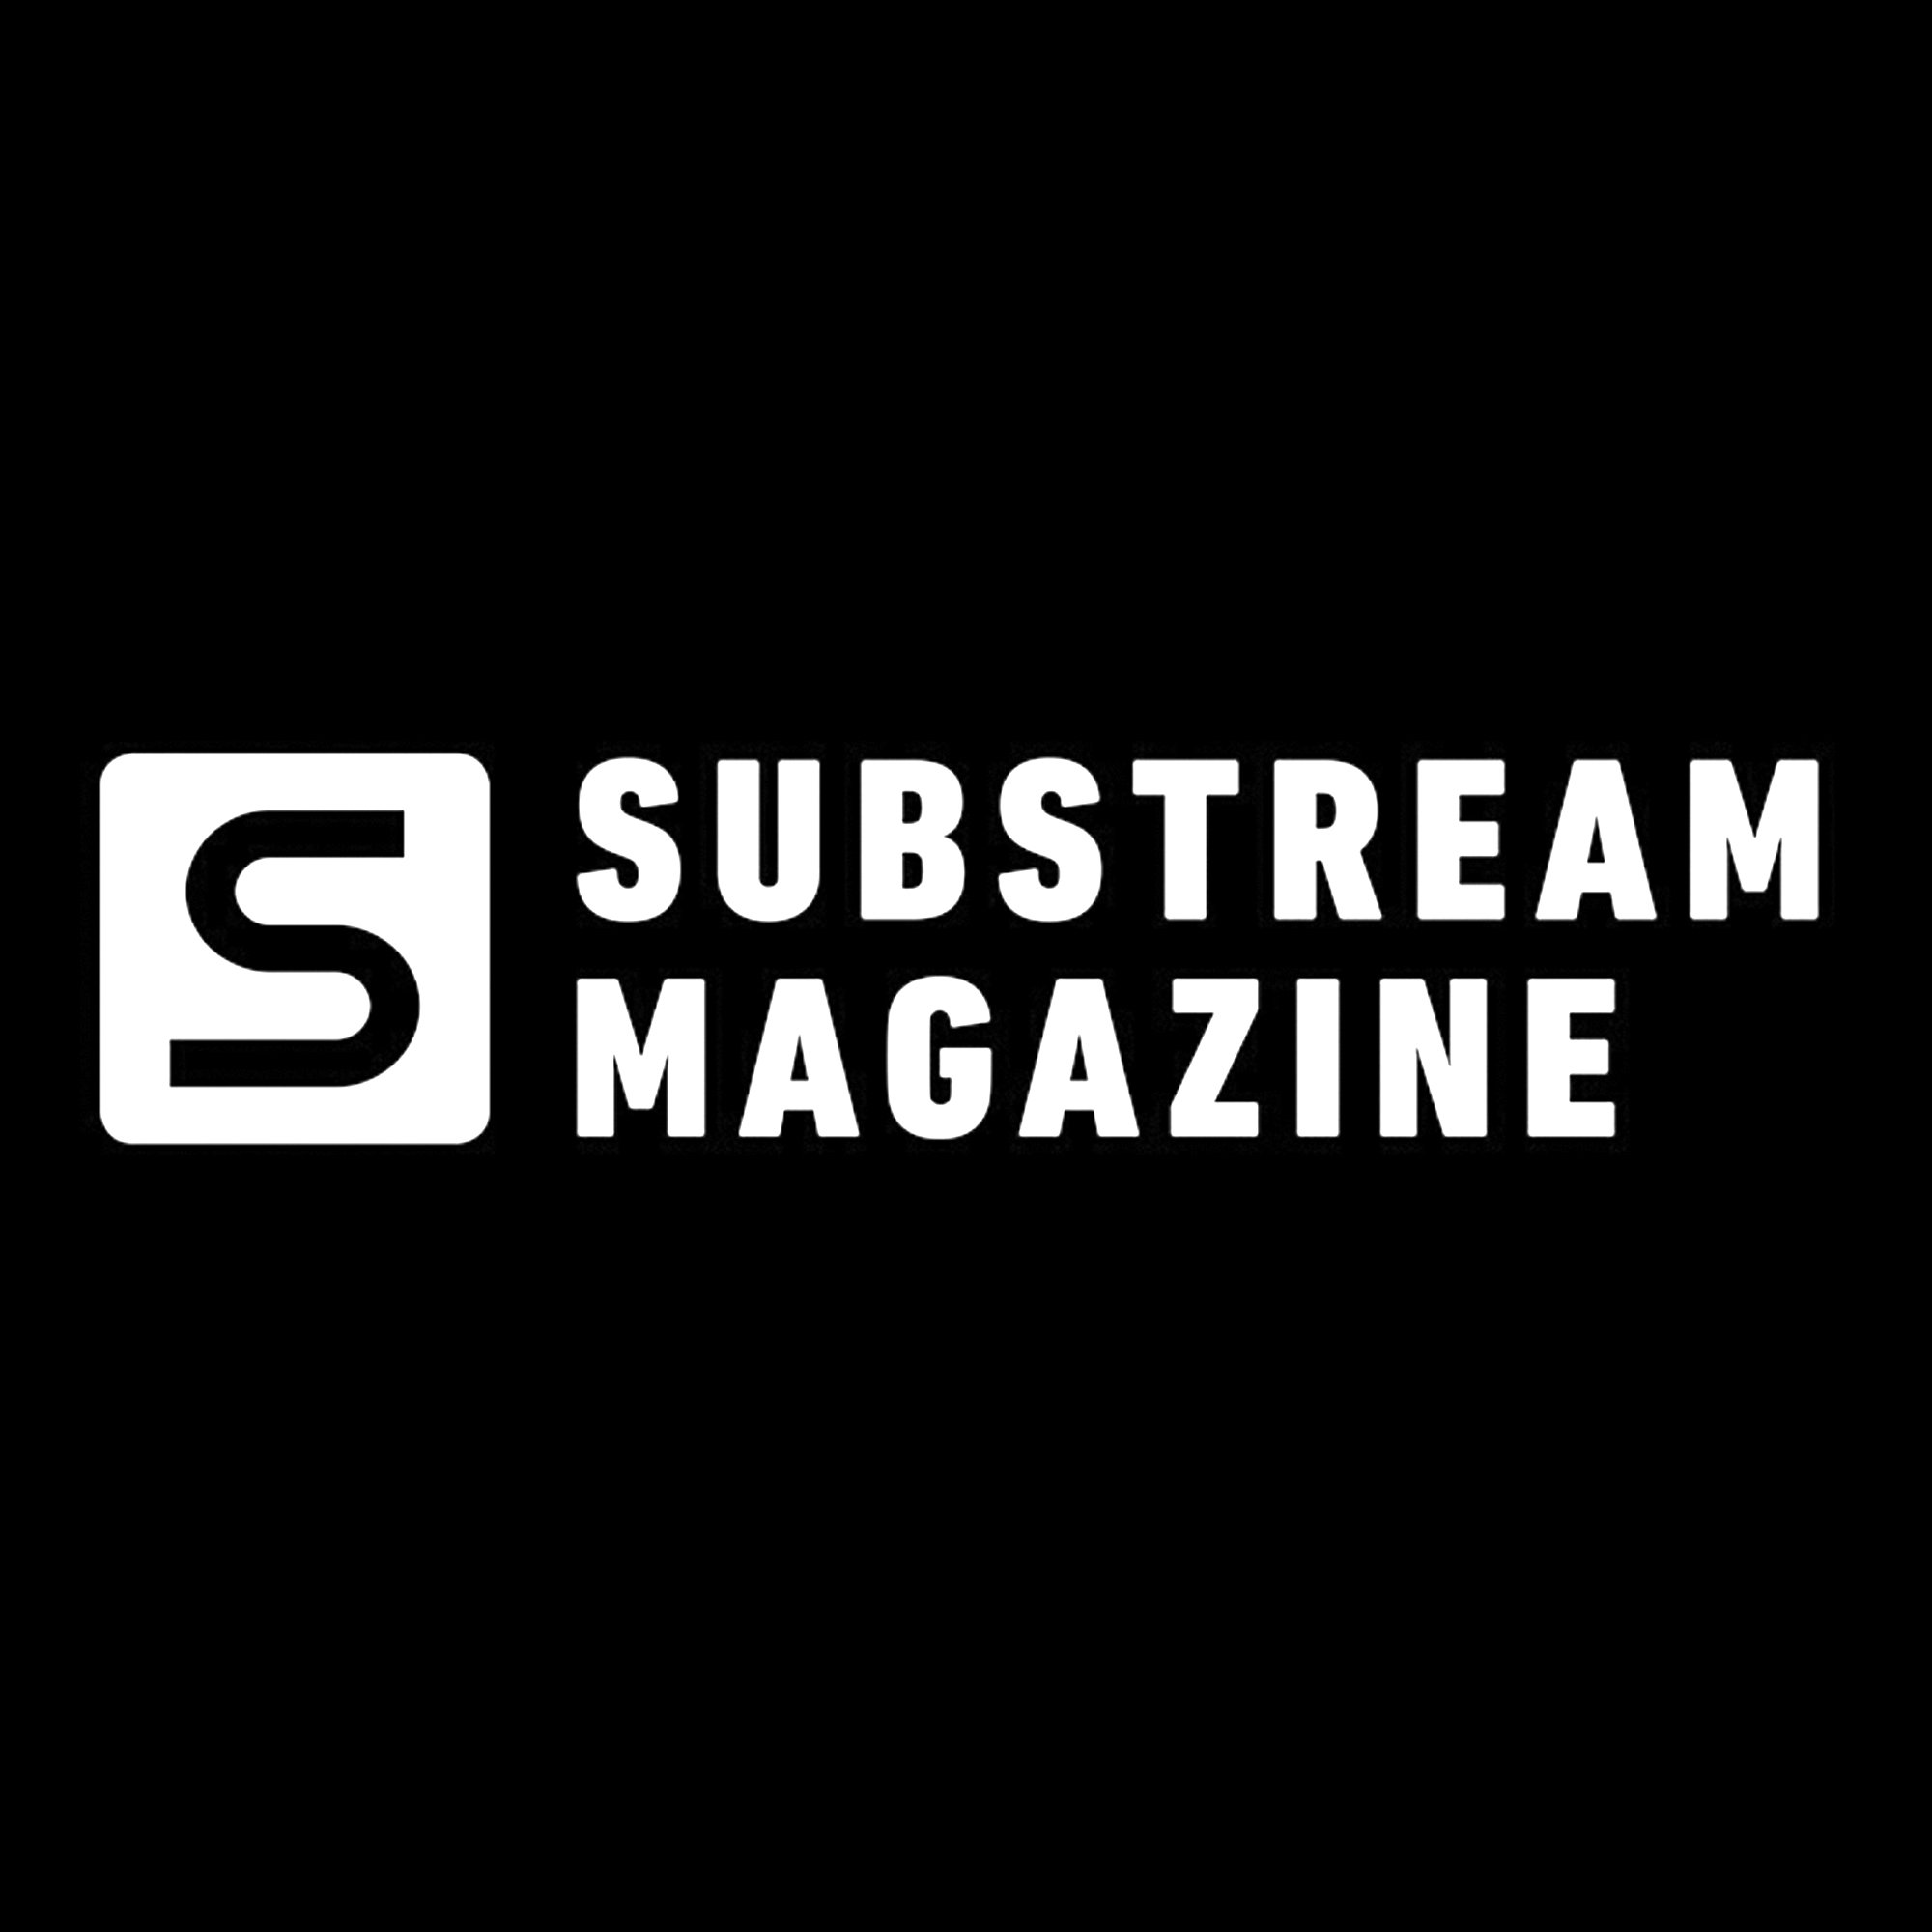 substream magazine inveretd web logo.jpg